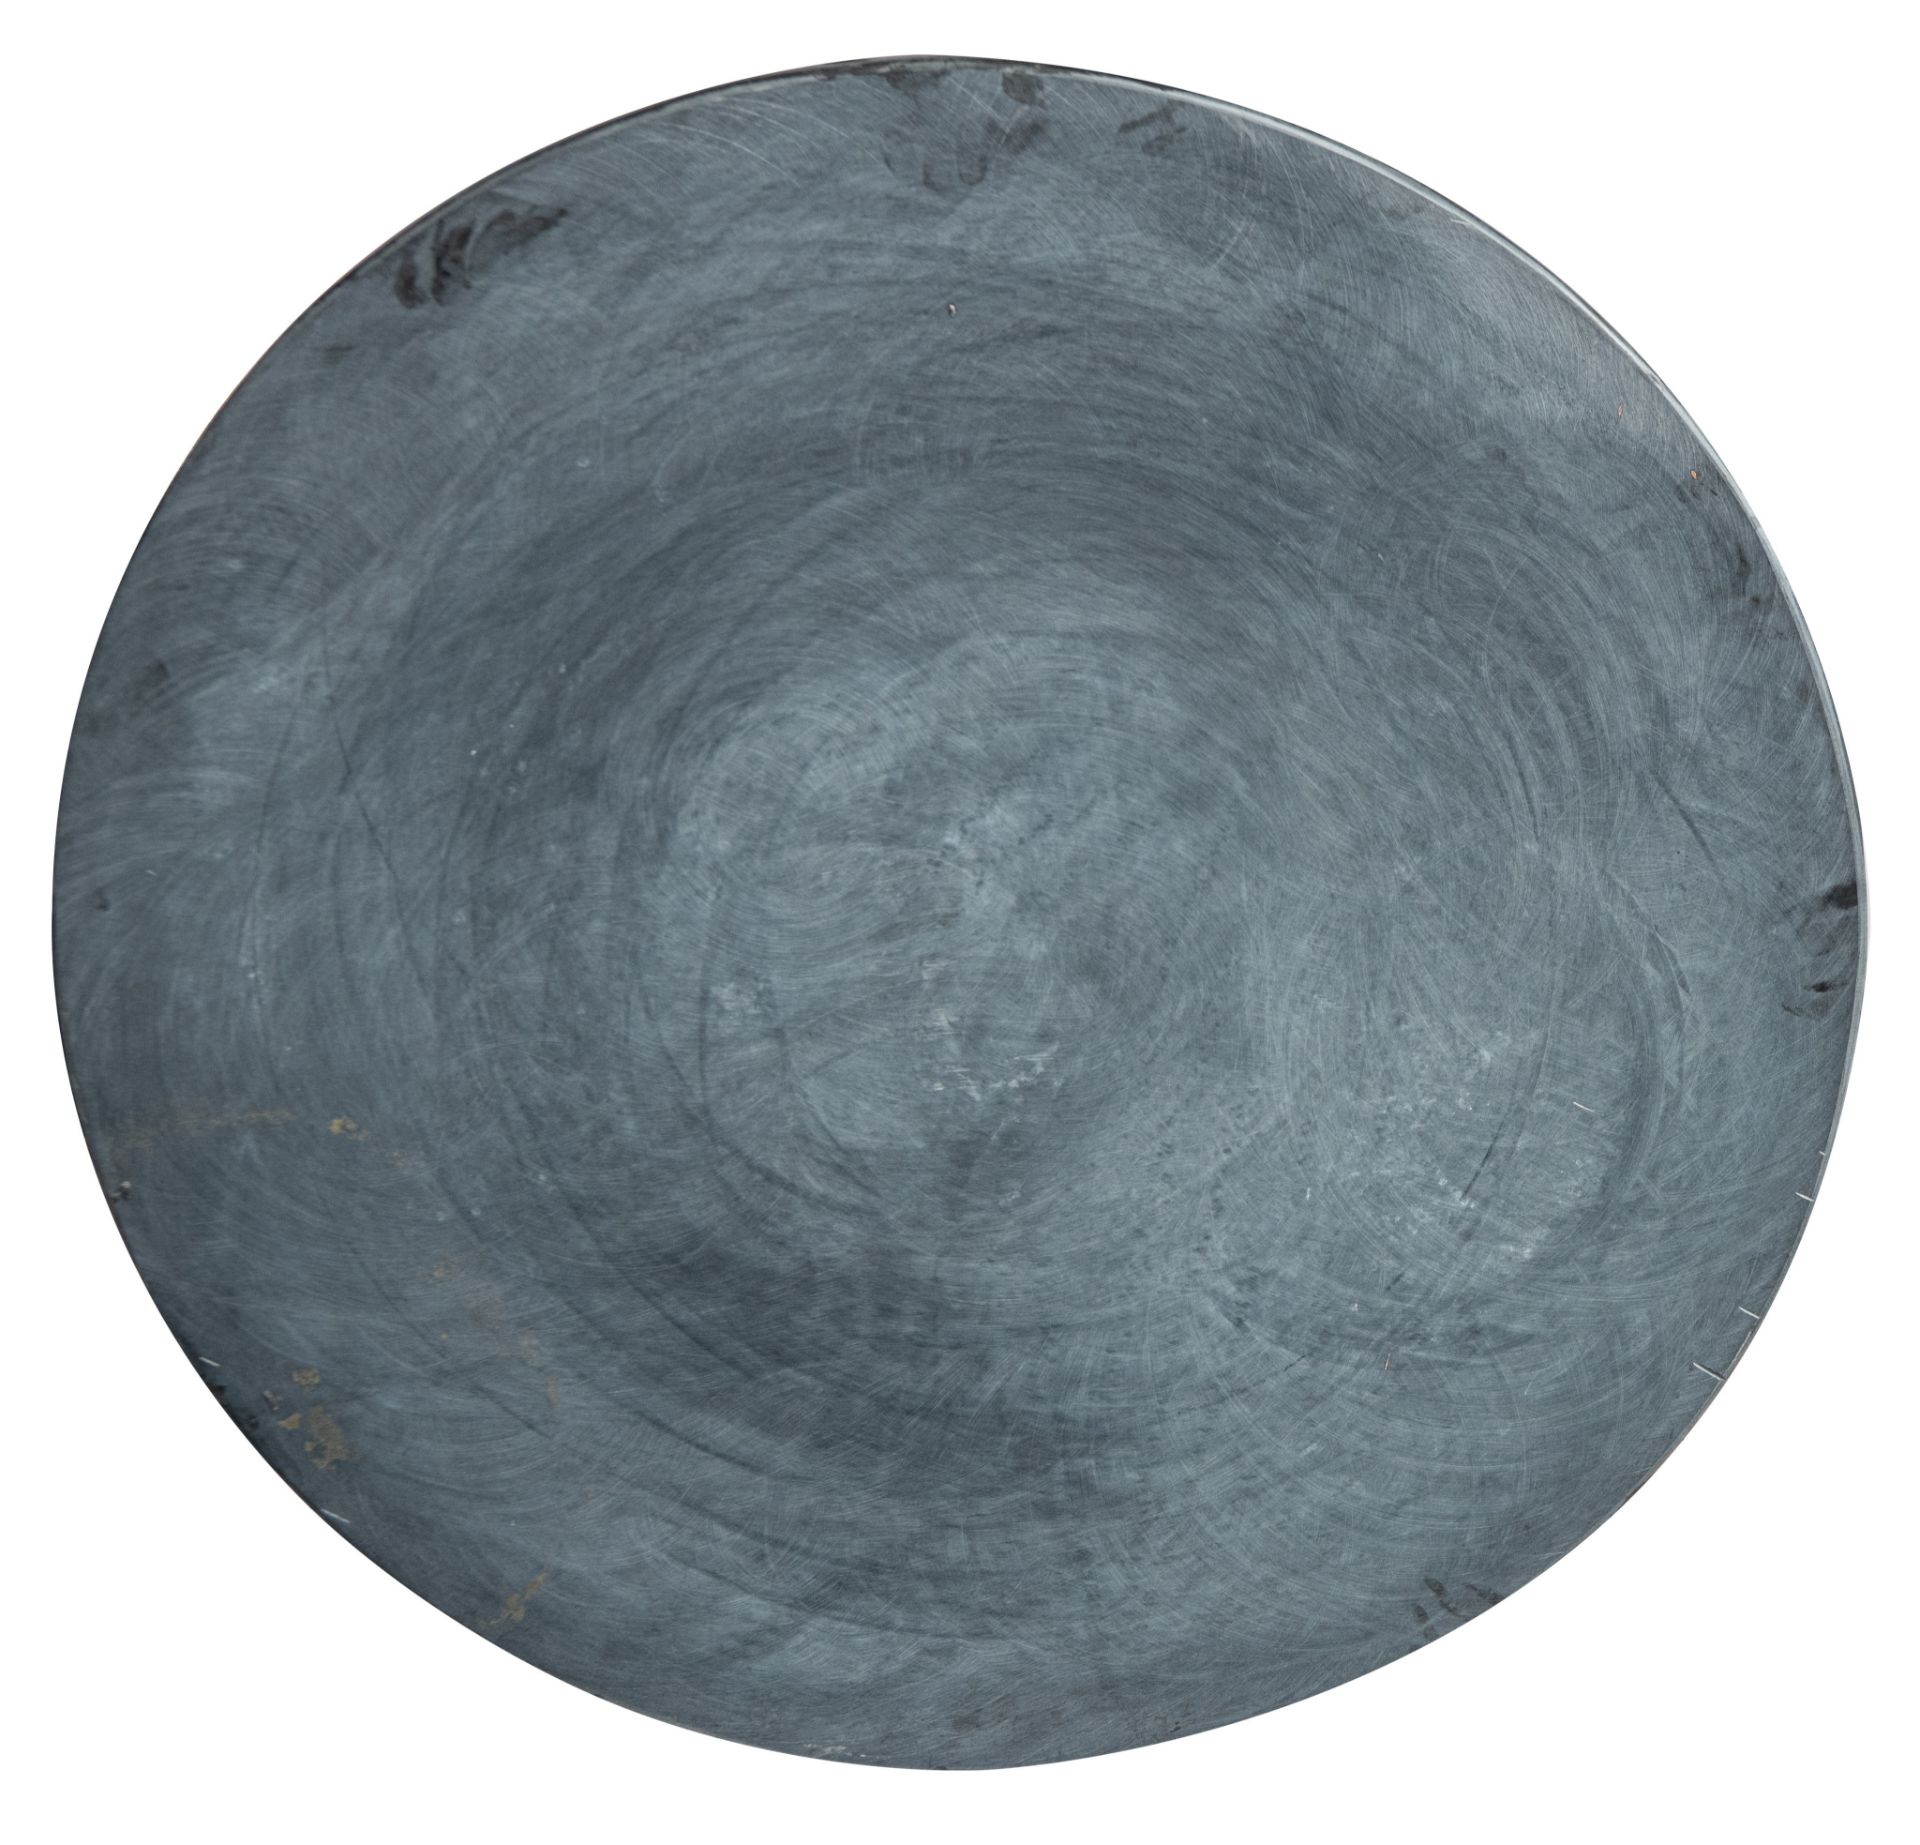 A circular tabletop in Italian pietra dura, ¯ 90 cm - Image 2 of 2